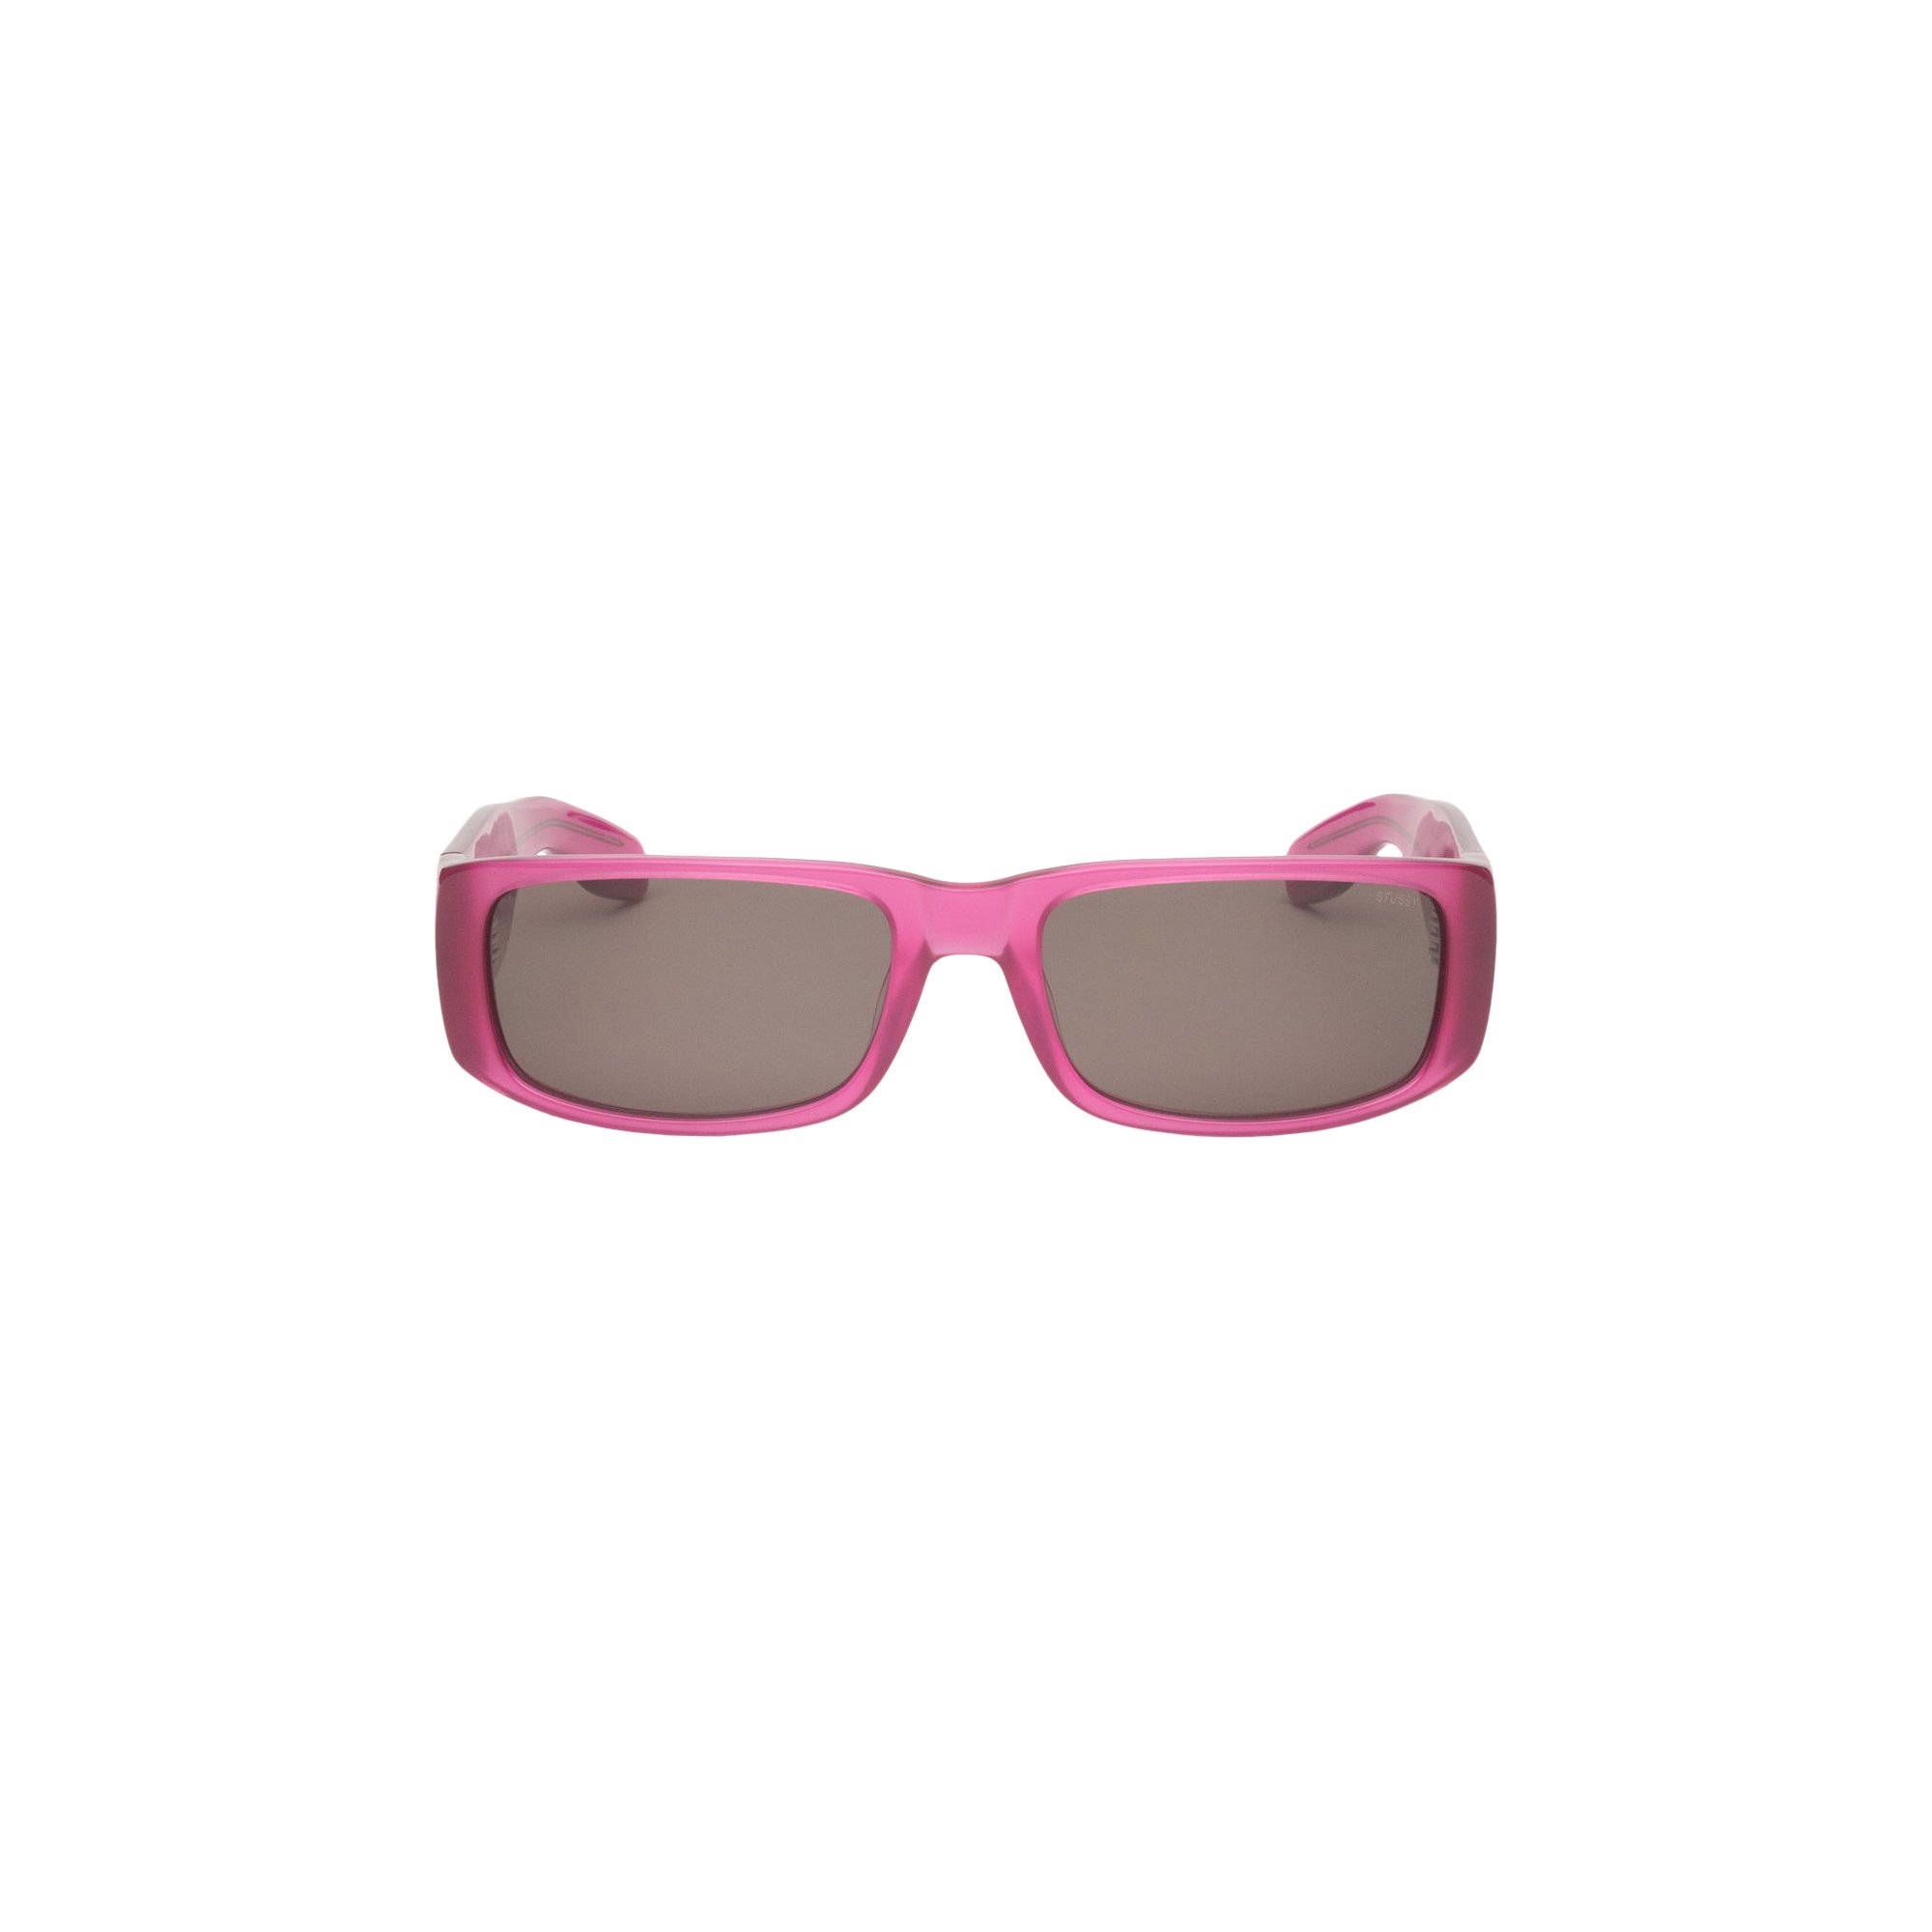 Buy Stussy Eric Sunglasses 'Translucent Hot Pink' - 338211 TRAN | GOAT